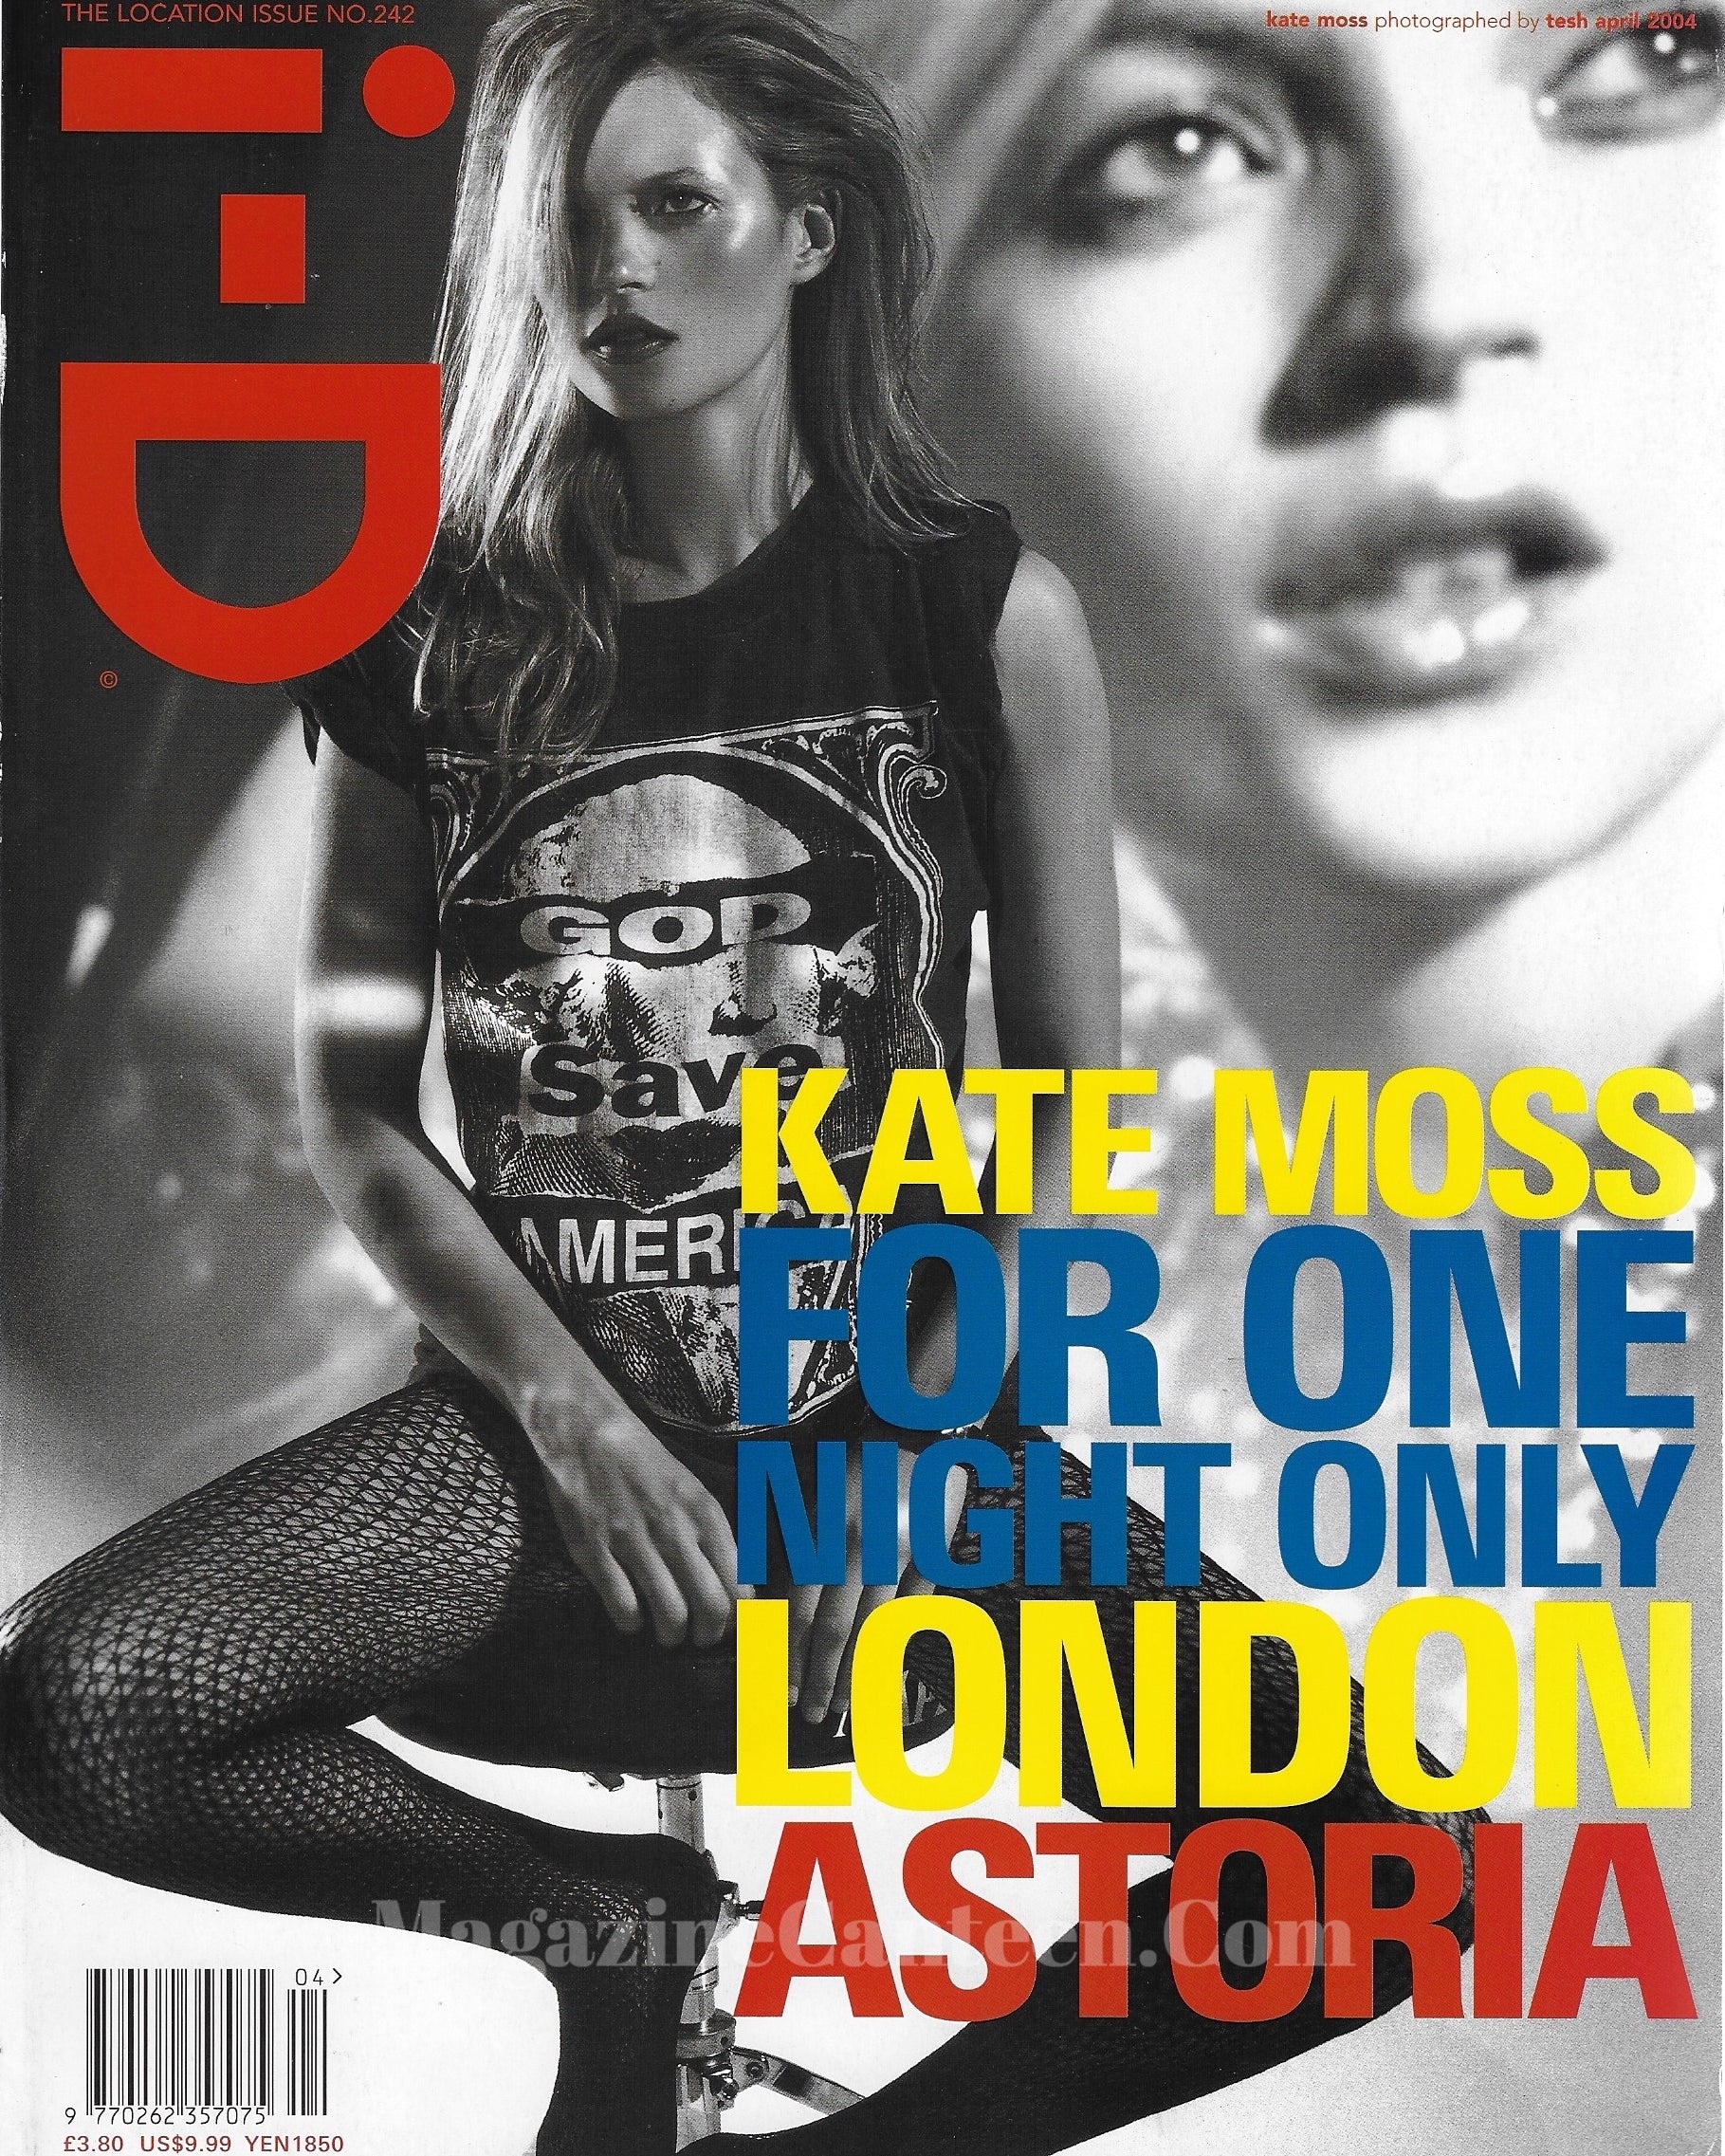 I-D Magazine 242 - Kate Moss 2004